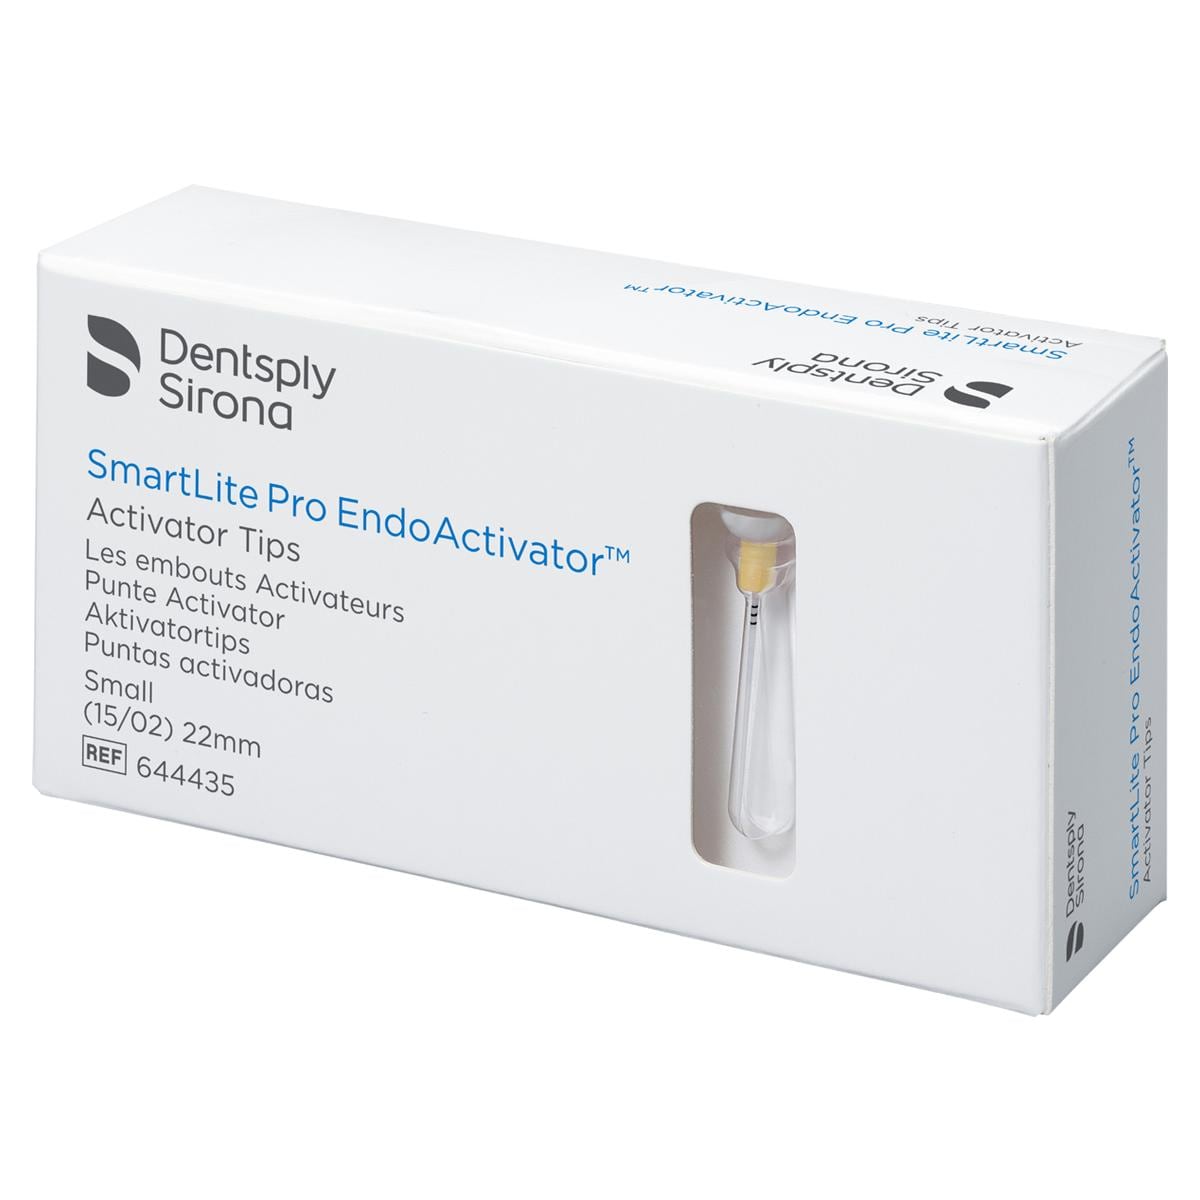 SmartLite Pro EndoActivator, Tips - Small, 25 pcs